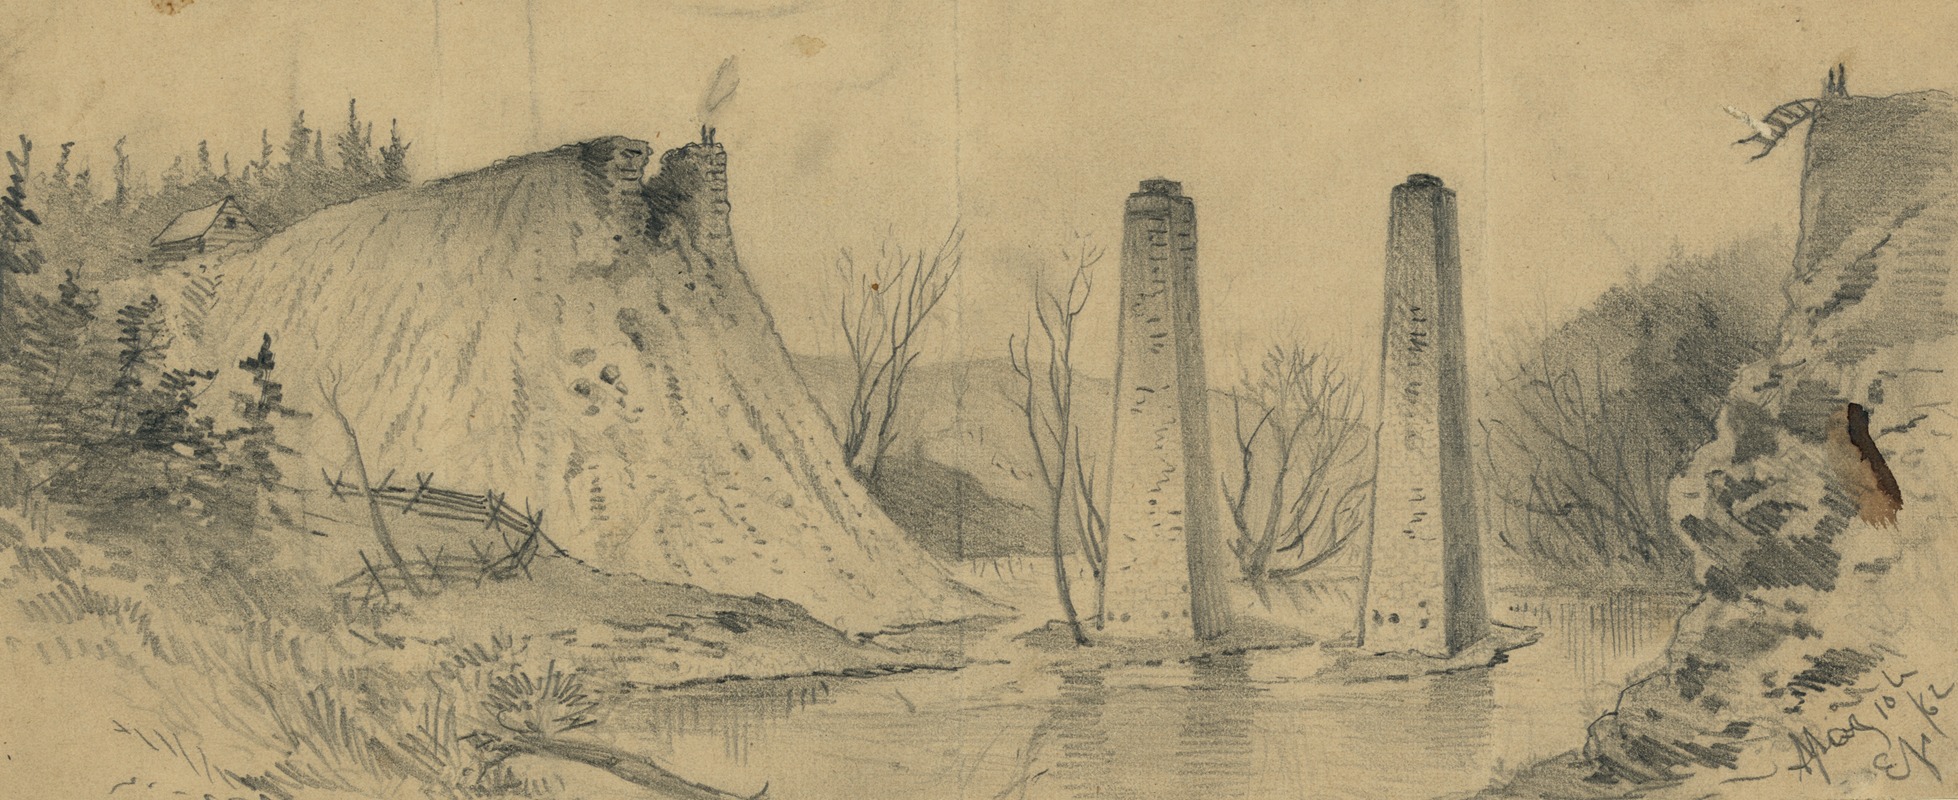 Edwin Forbes - Ruins of the Acquia Creek and Fredericksburg R.R. bridge, over Potomac Creek